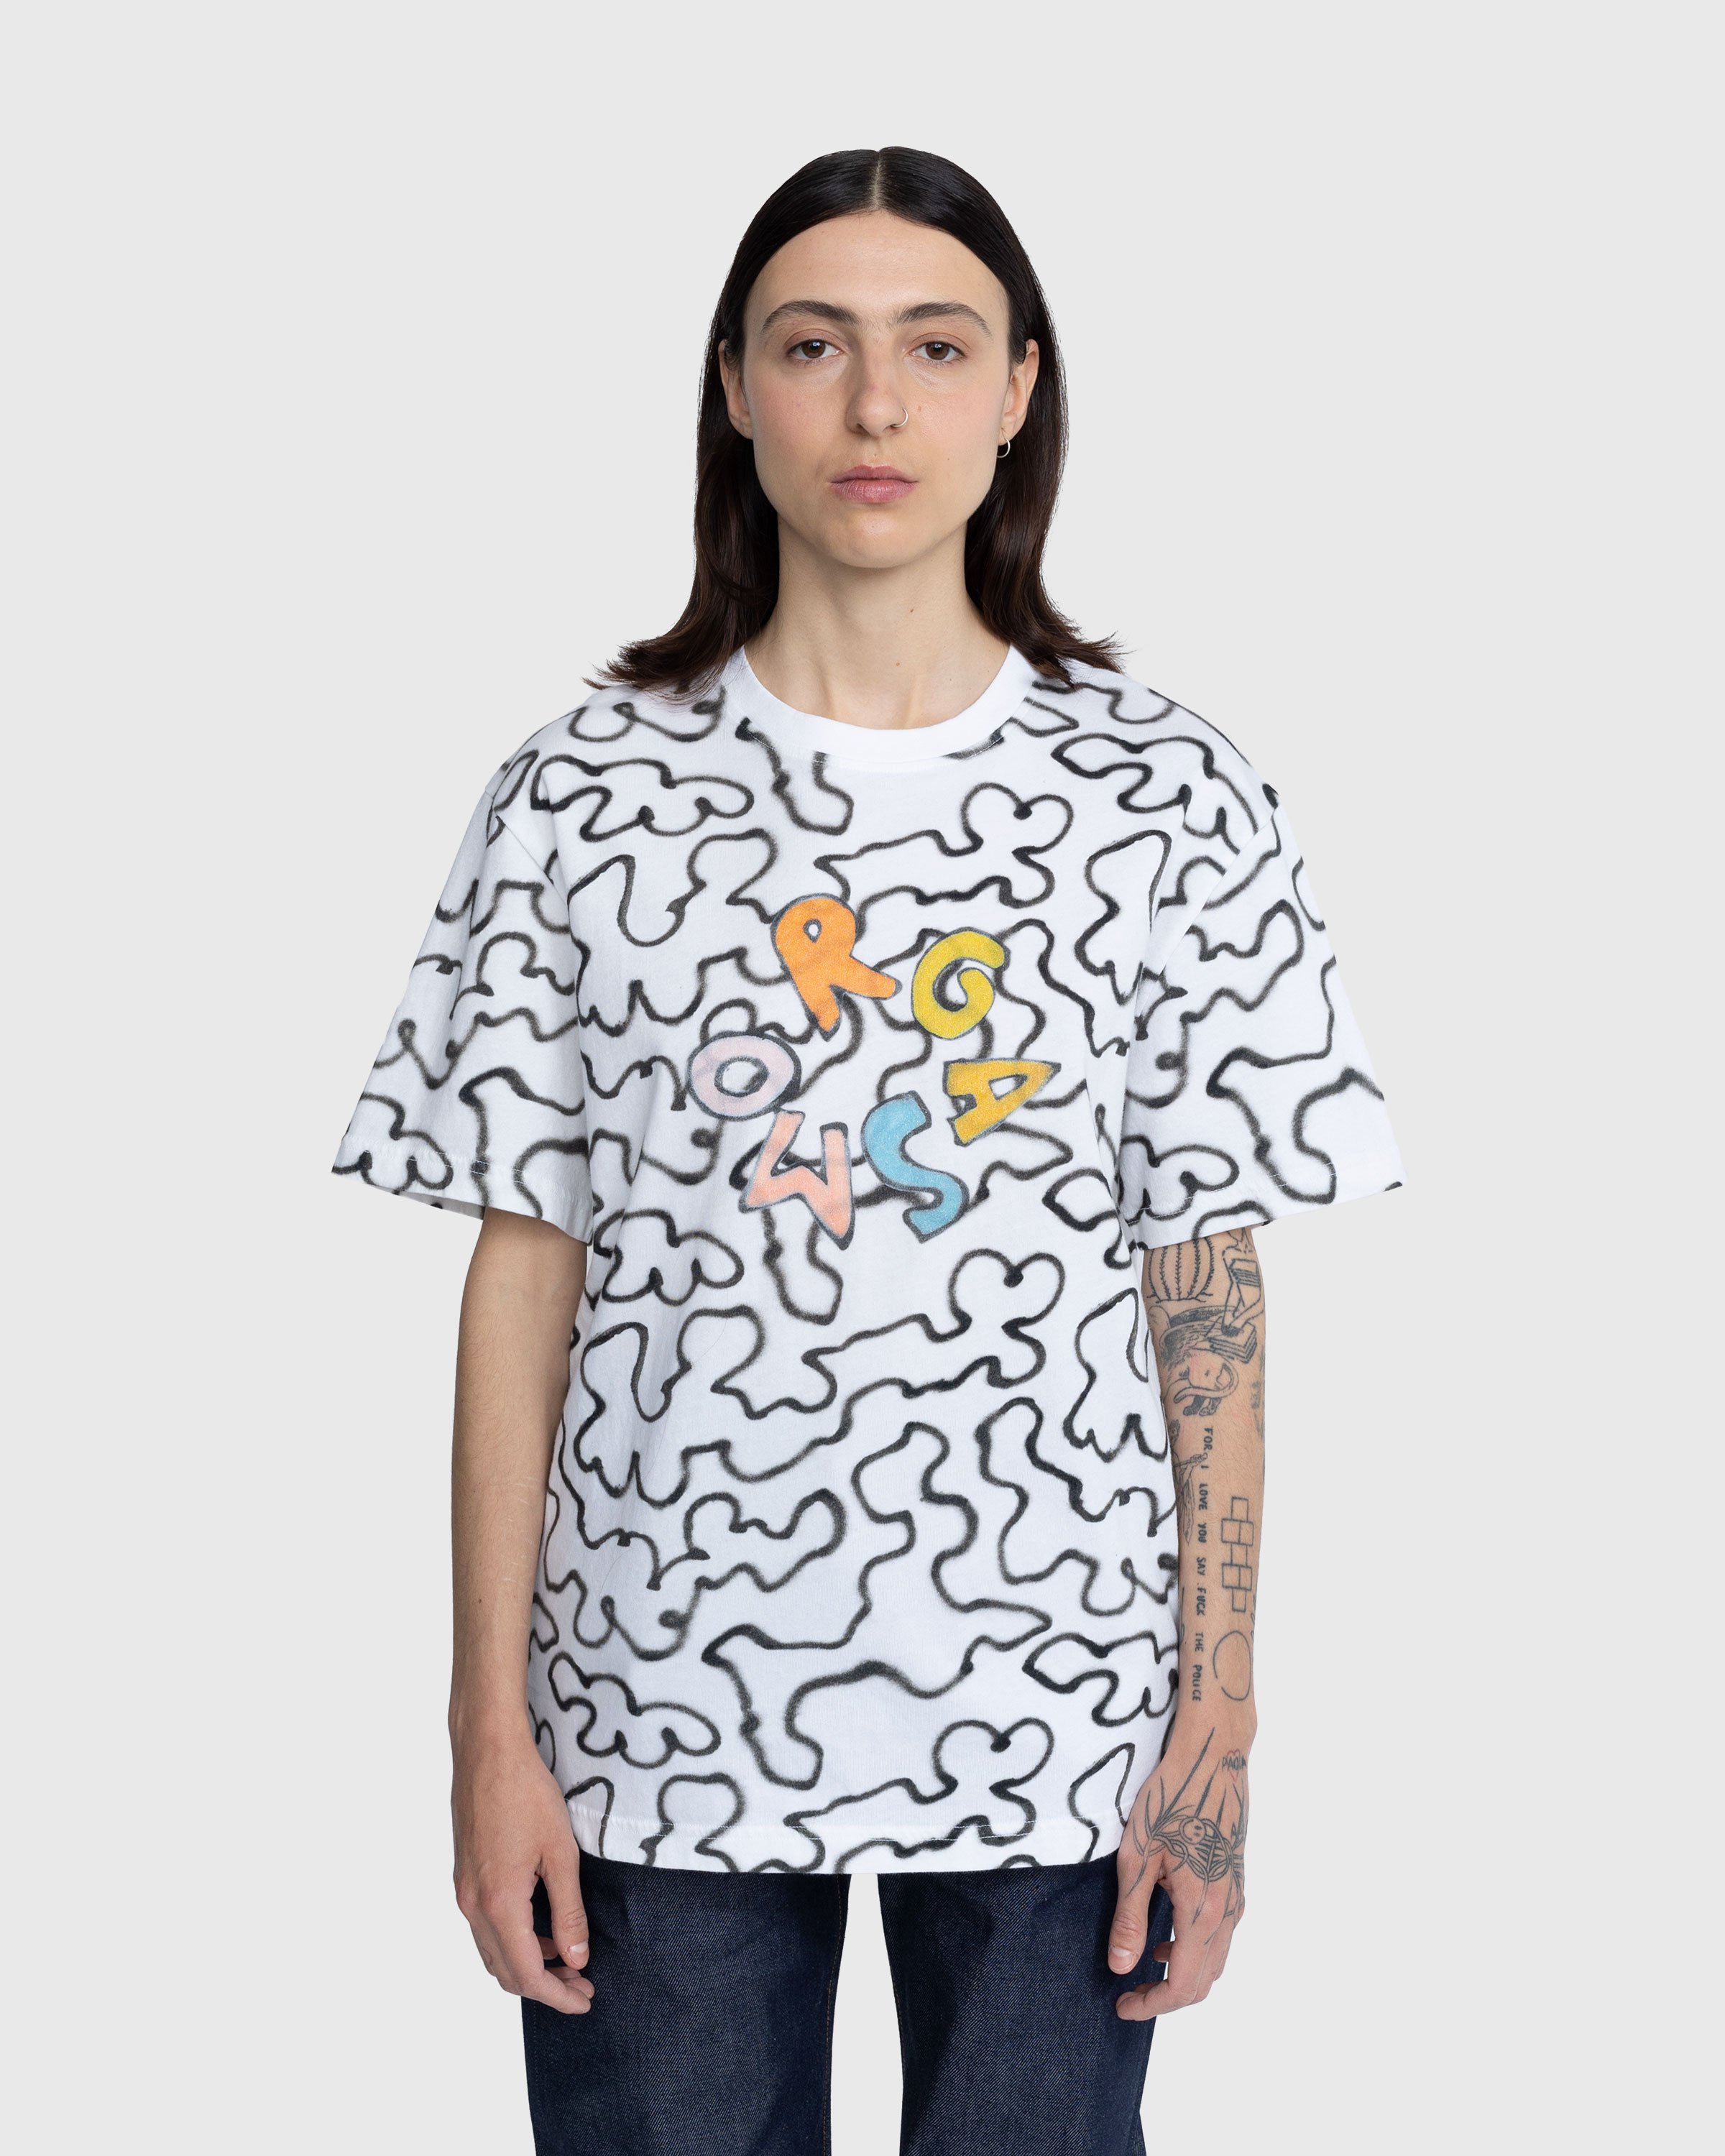 Carne Bollente x Frizbee Ceramics - Orgasm Twister T-Shirt White - Clothing - Multi - Image 2